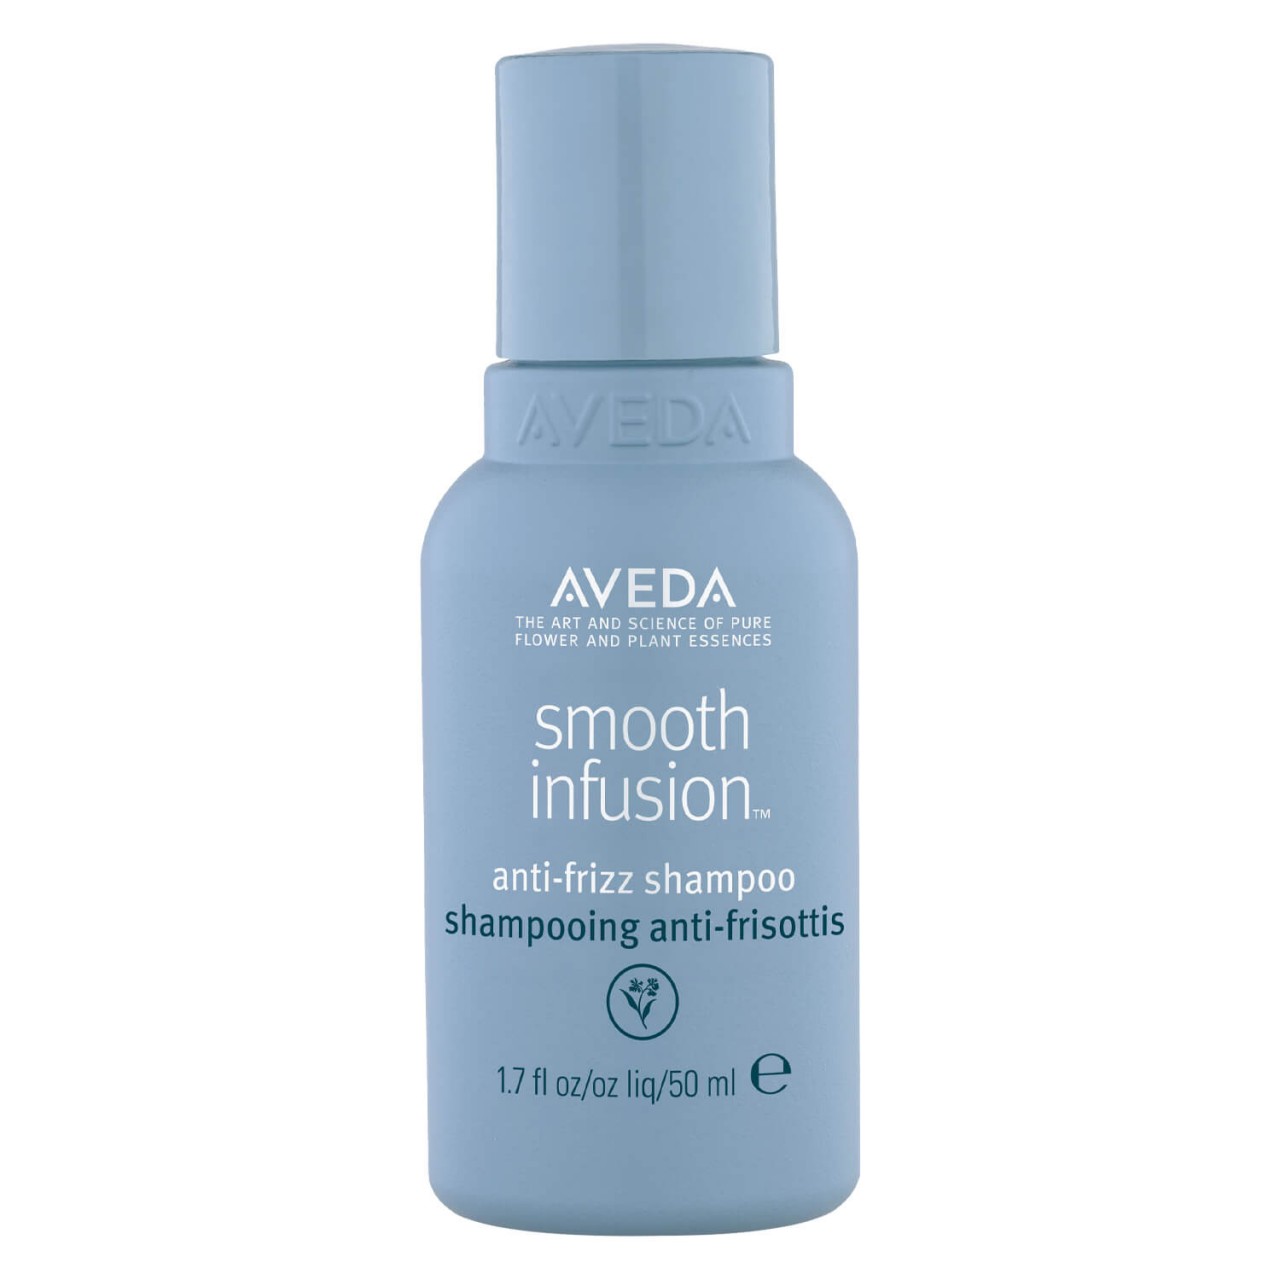 smooth infusion - anti- frizz shampoo von Aveda